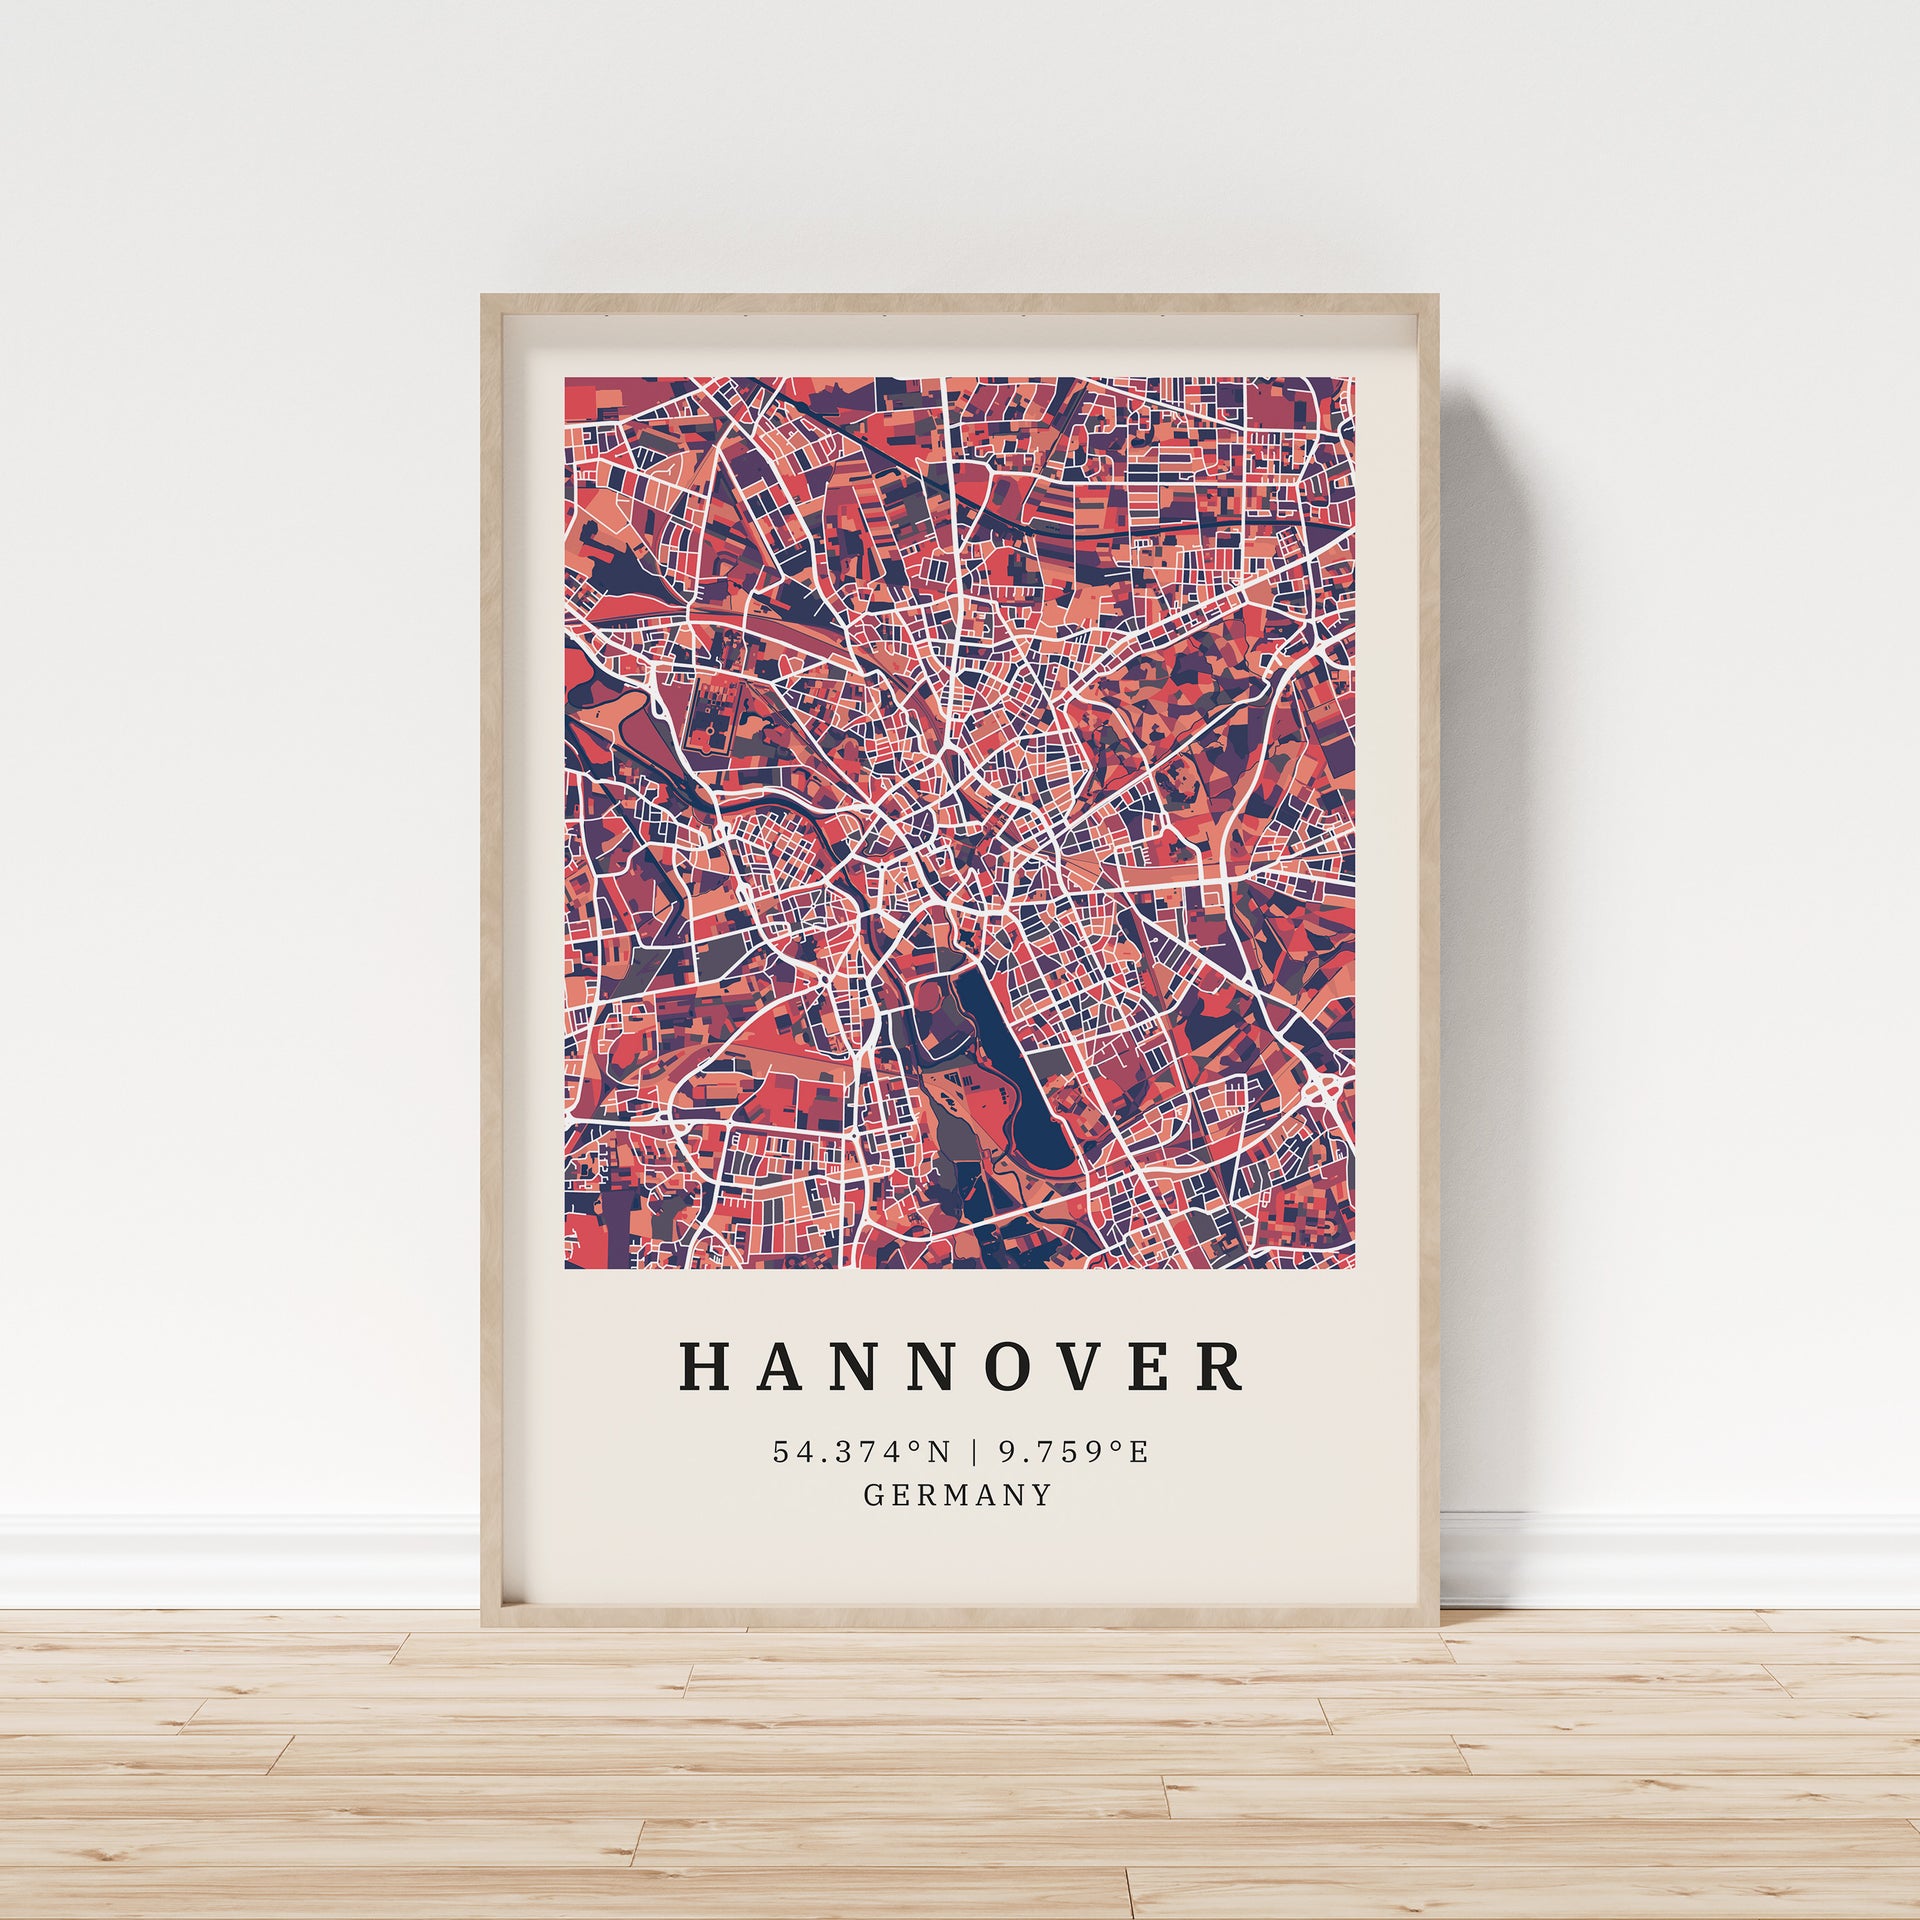 & vmaps - Hannover Personalisierte Poster – Stadtkarten Geschenke